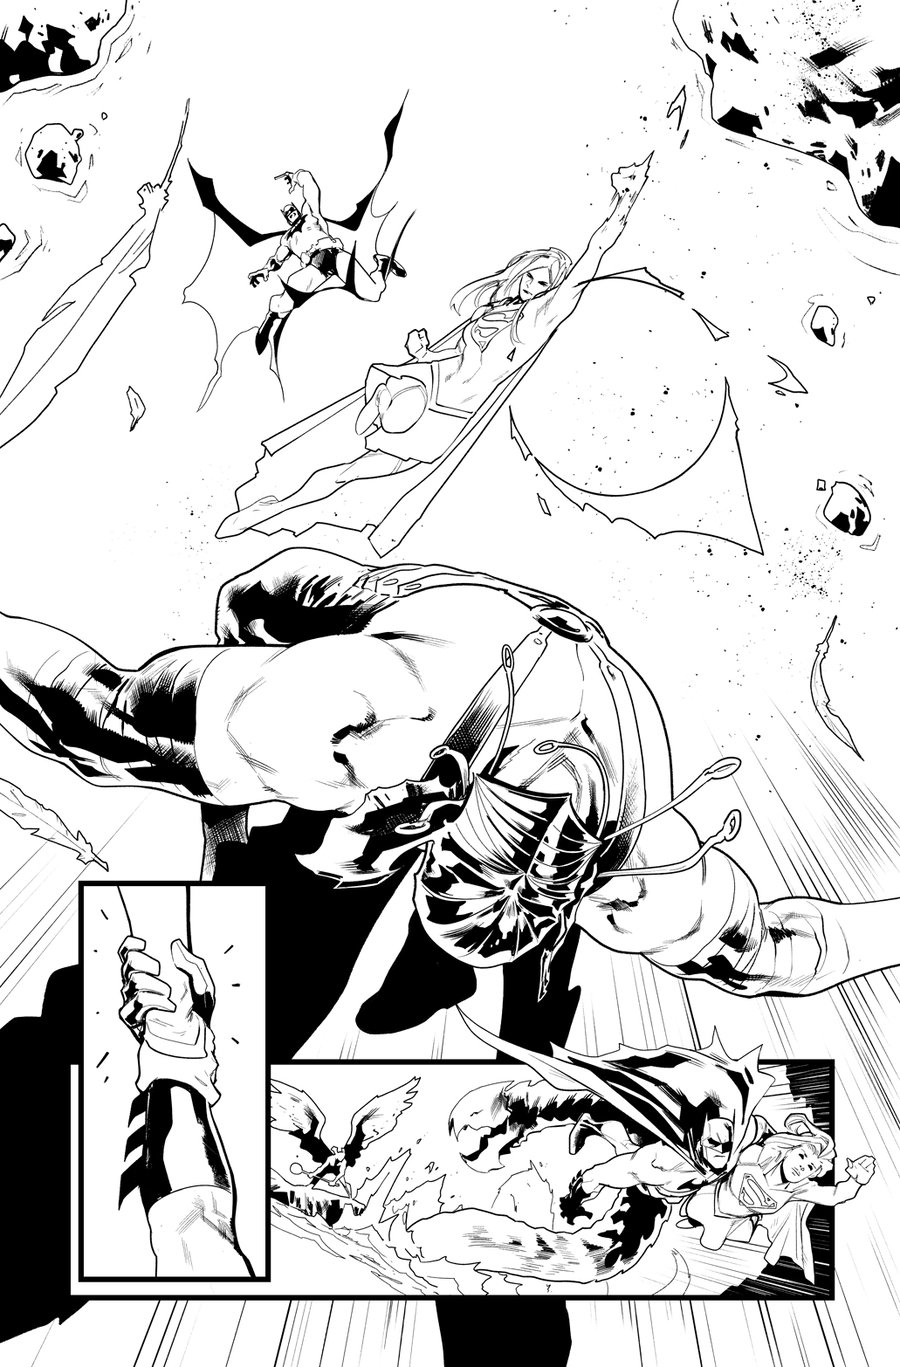 Image of BATMAN/SUPERMAN #4 p.14 ARTIST'S PROOF